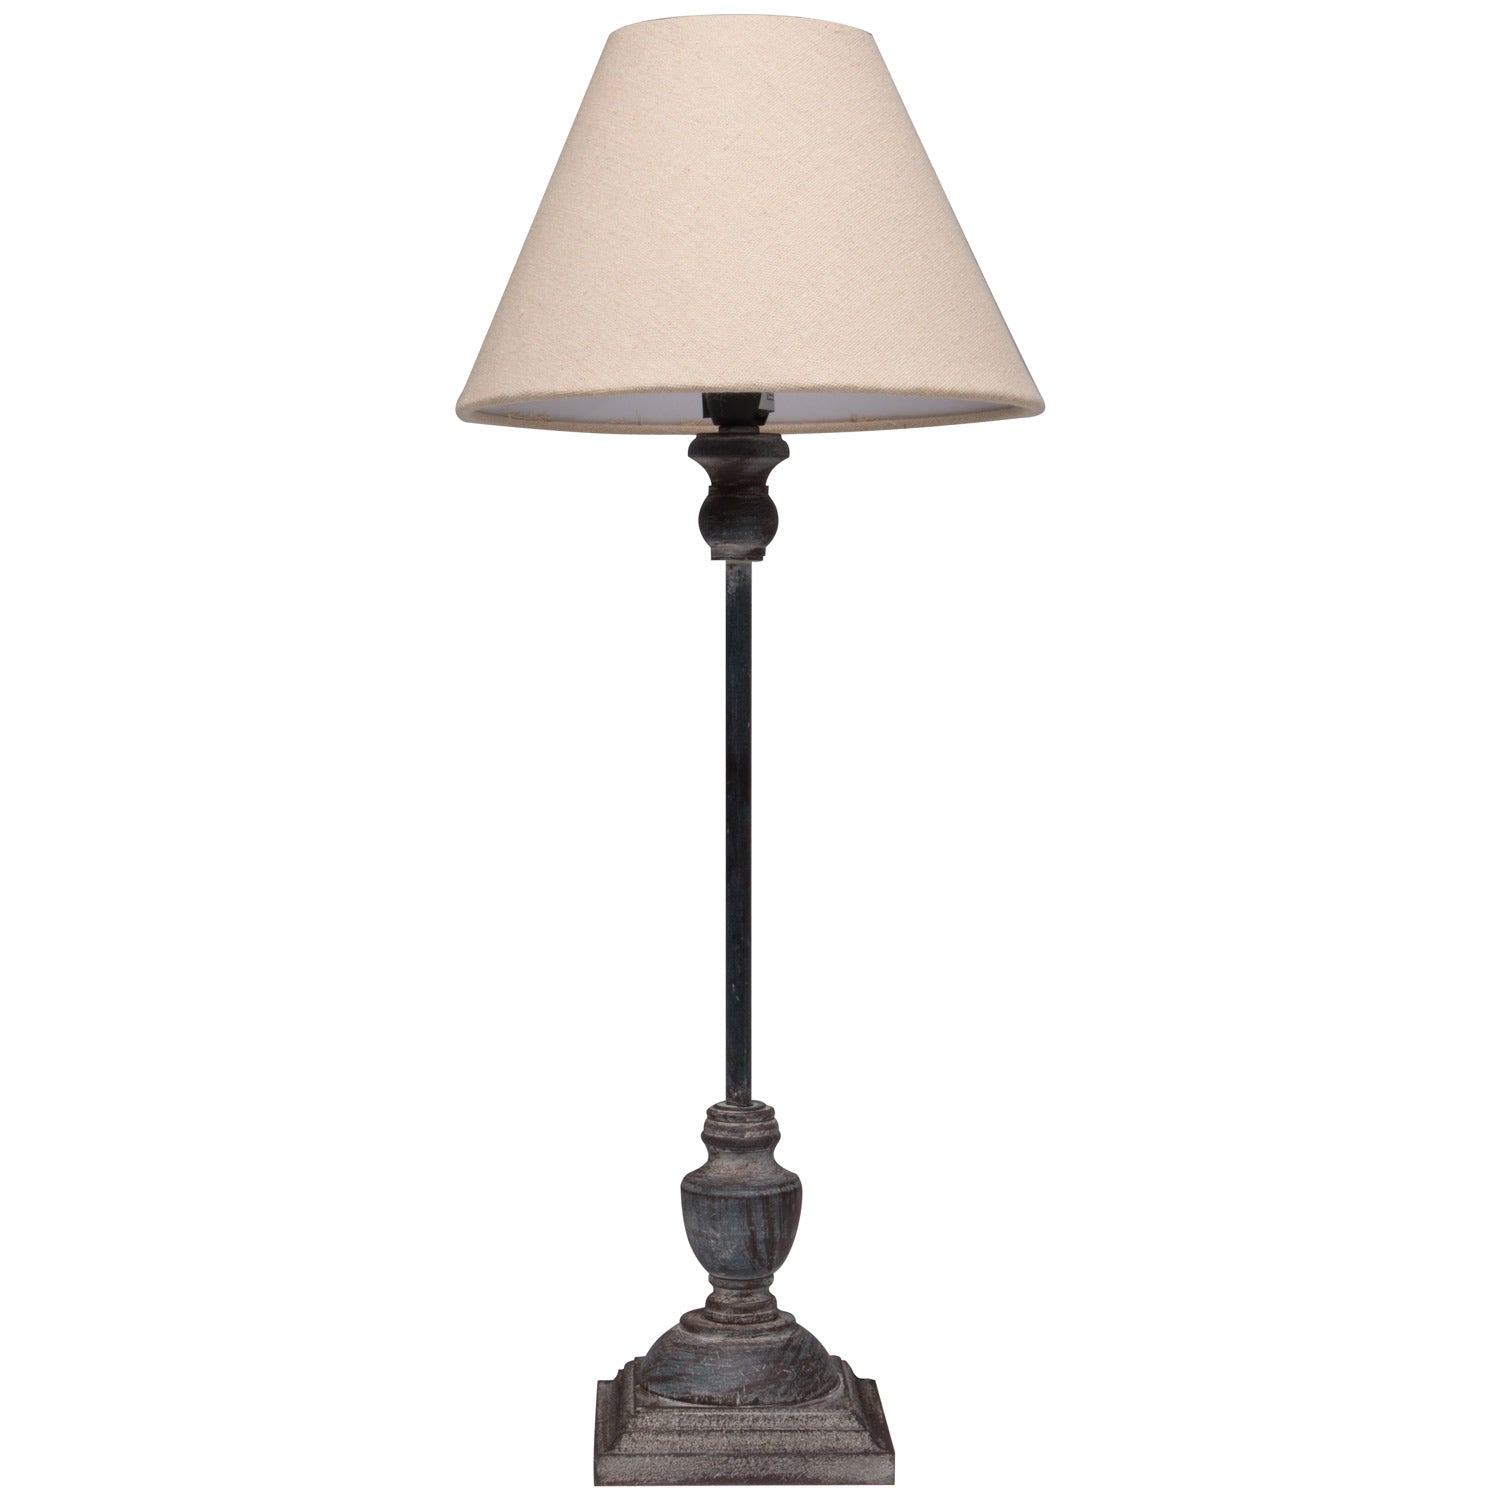 Botero Table Lamp, Grey Washed Wood